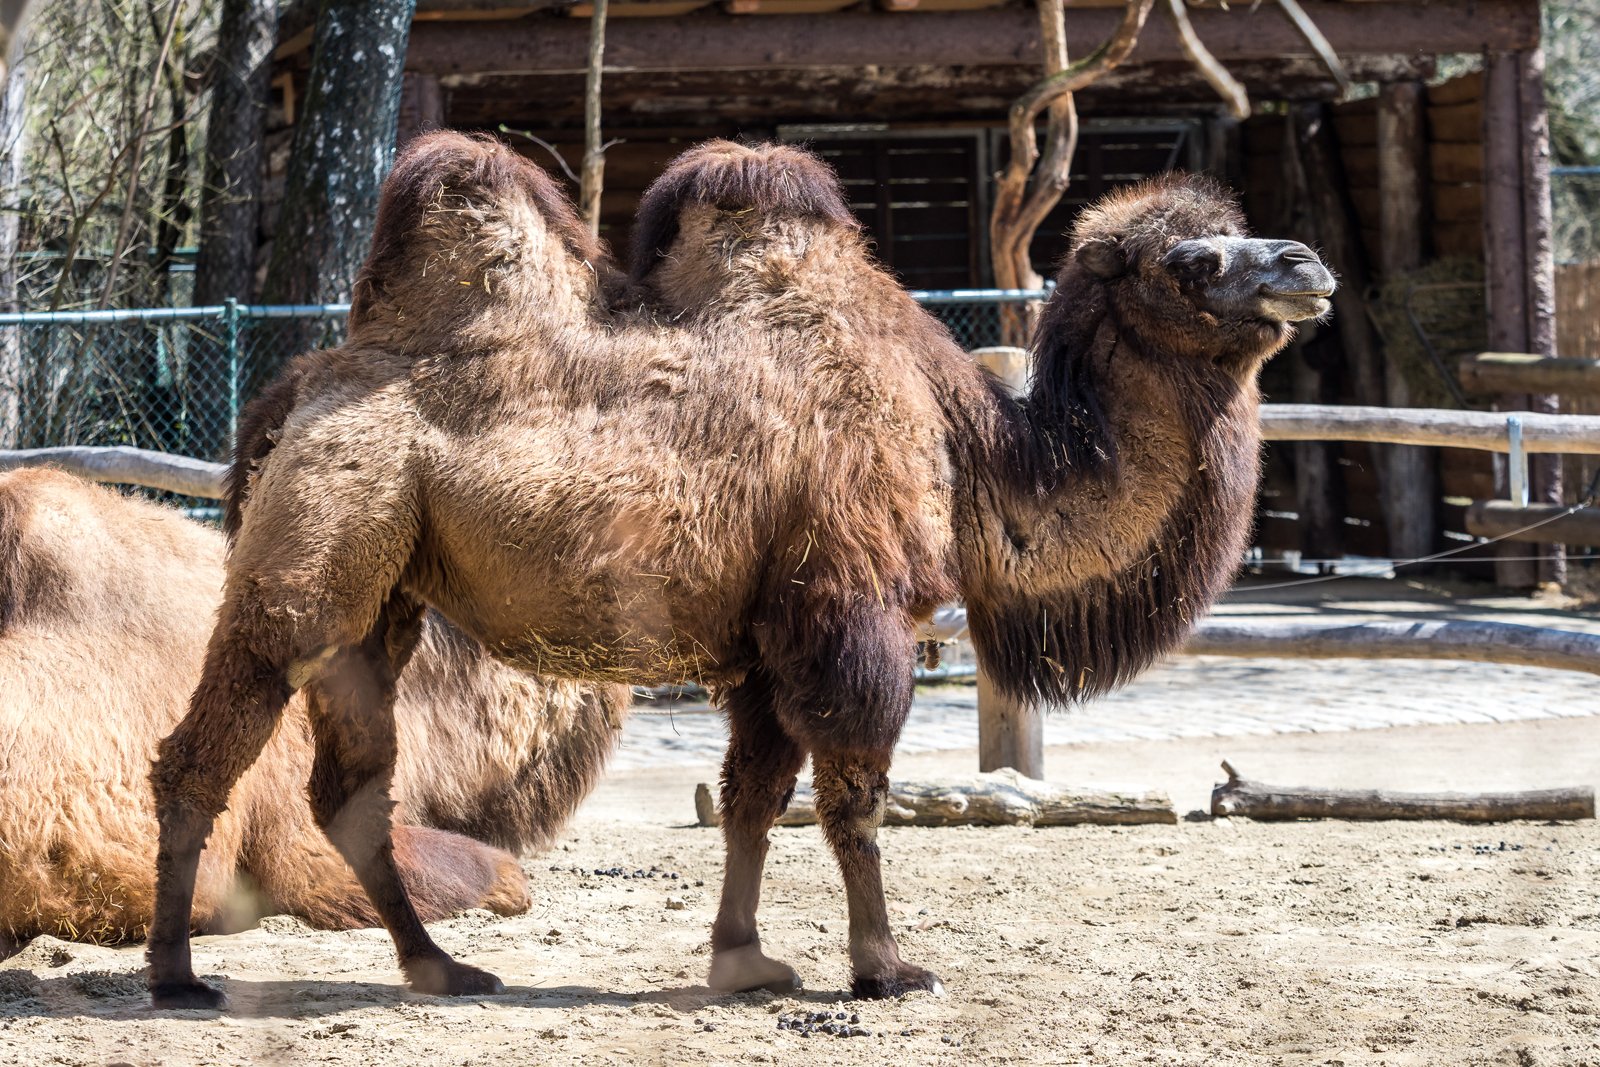 Velbloud dvouhrbý (Camelus ferus) – RudiErnst / Shutterstock